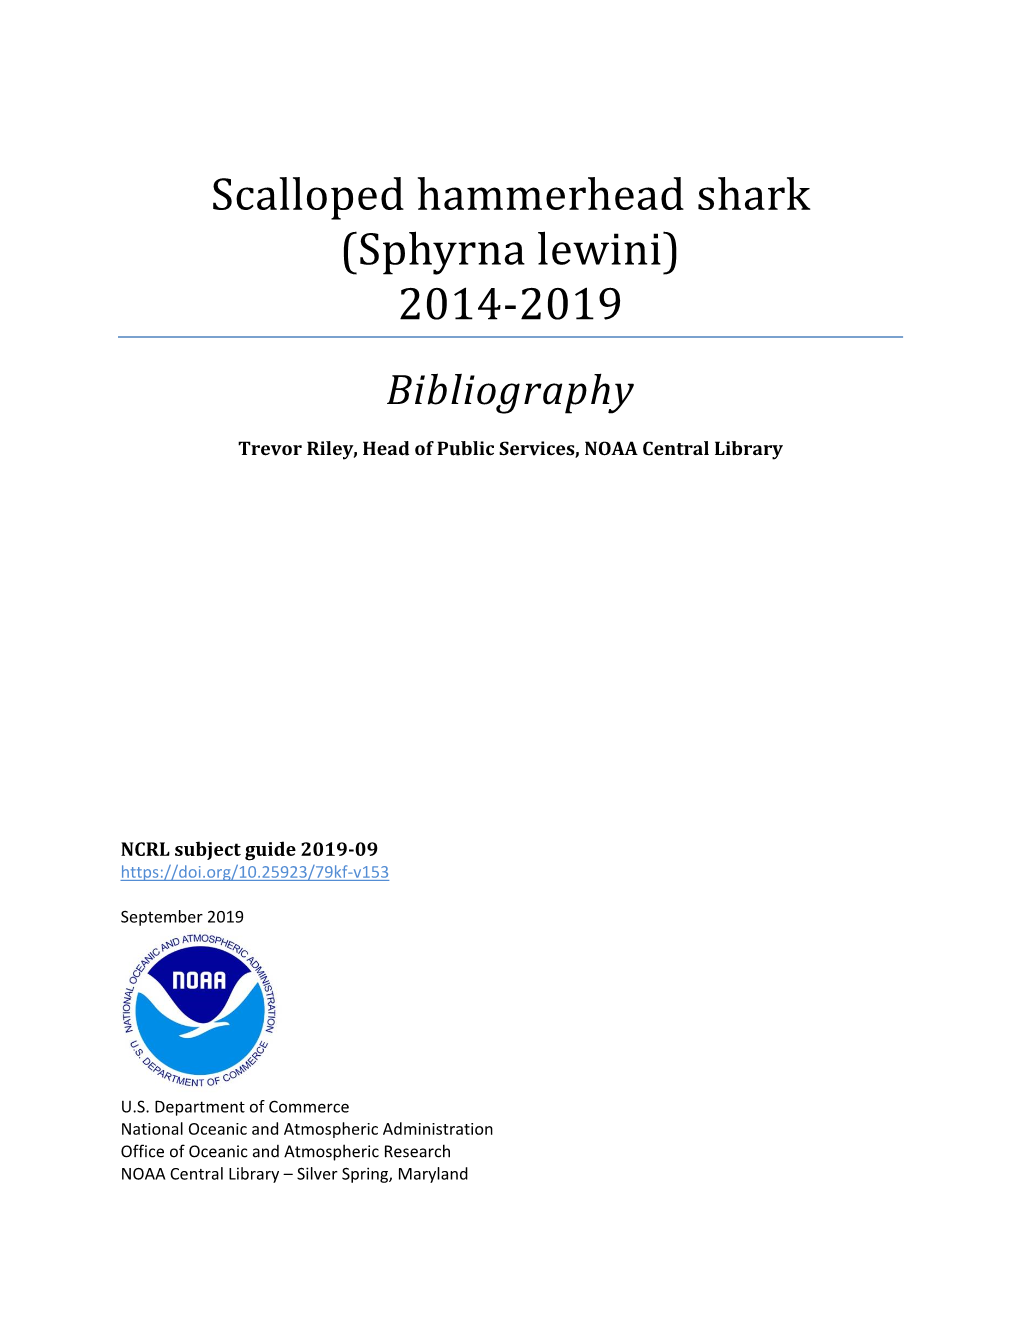 Scalloped Hammerhead Shark (Sphyrna Lewini) 2014-2019 Bibliography